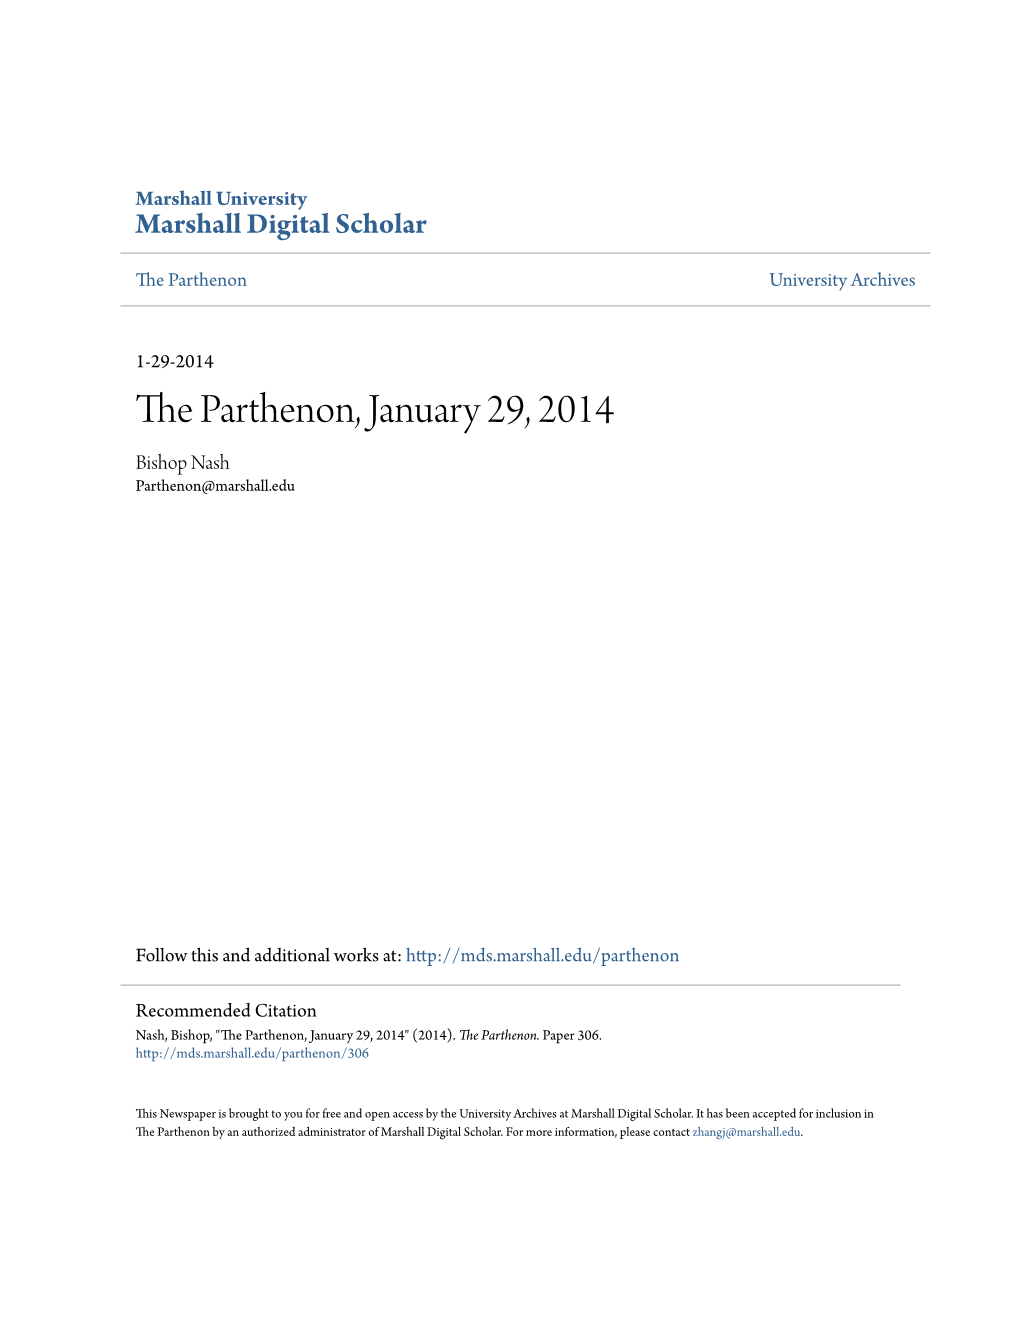 The Parthenon, January 29, 2014